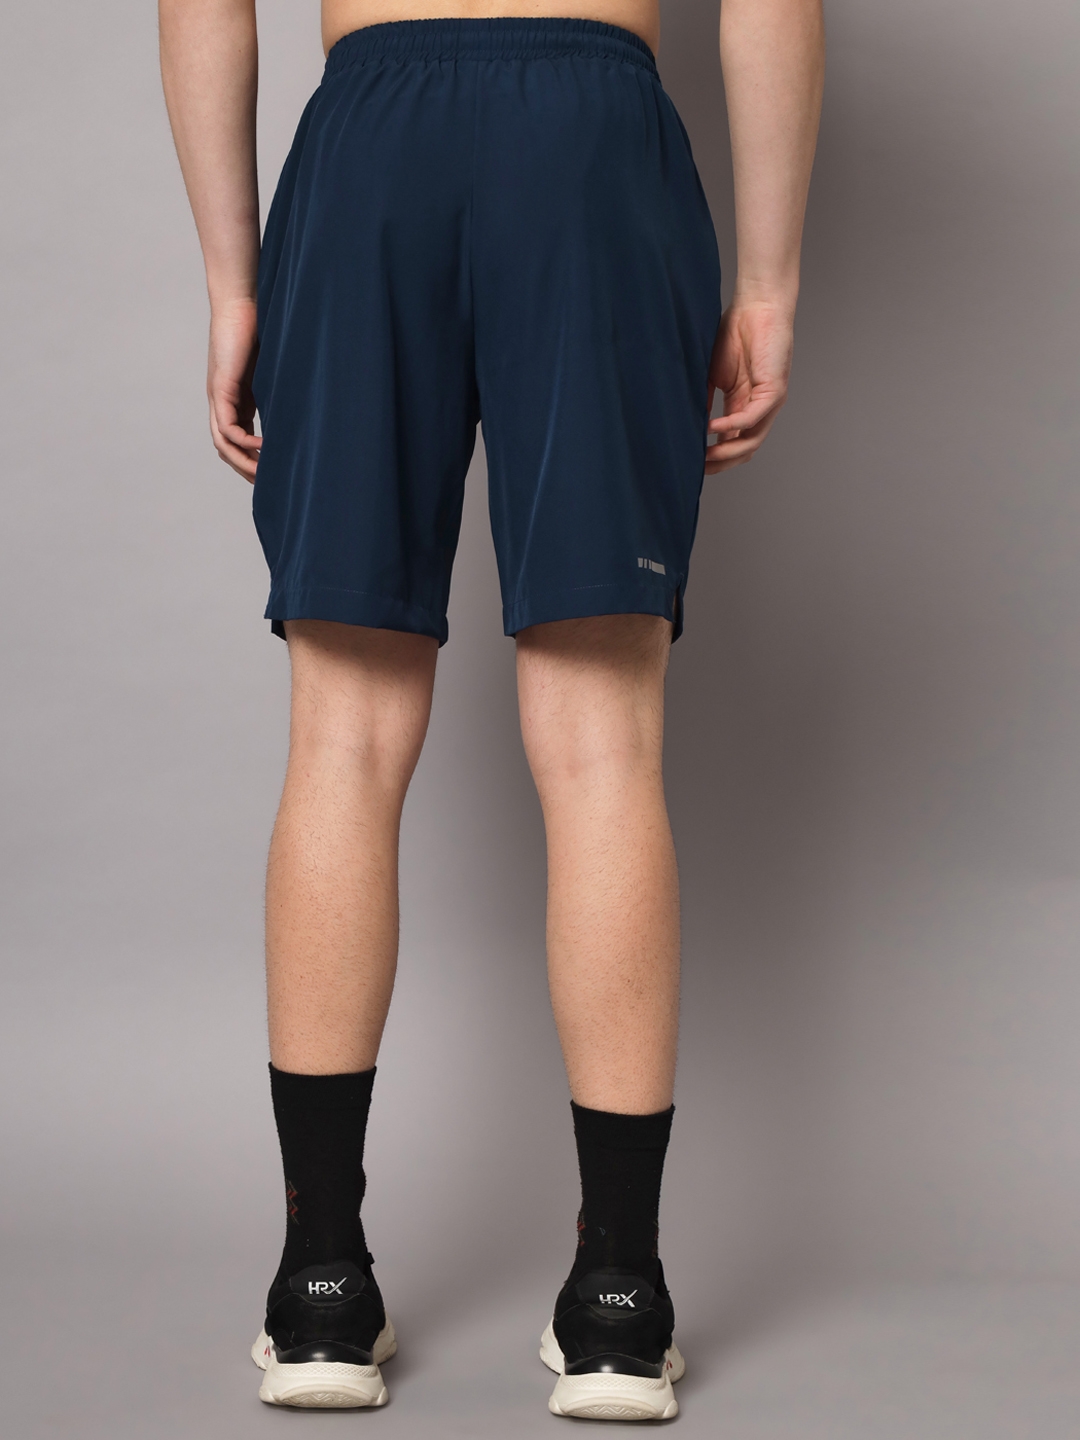 Masch Sports | Masch Sports Men’s Sports Wear, Active Wear, Gym, Running & Training Shorts with Zipped Pockets 4